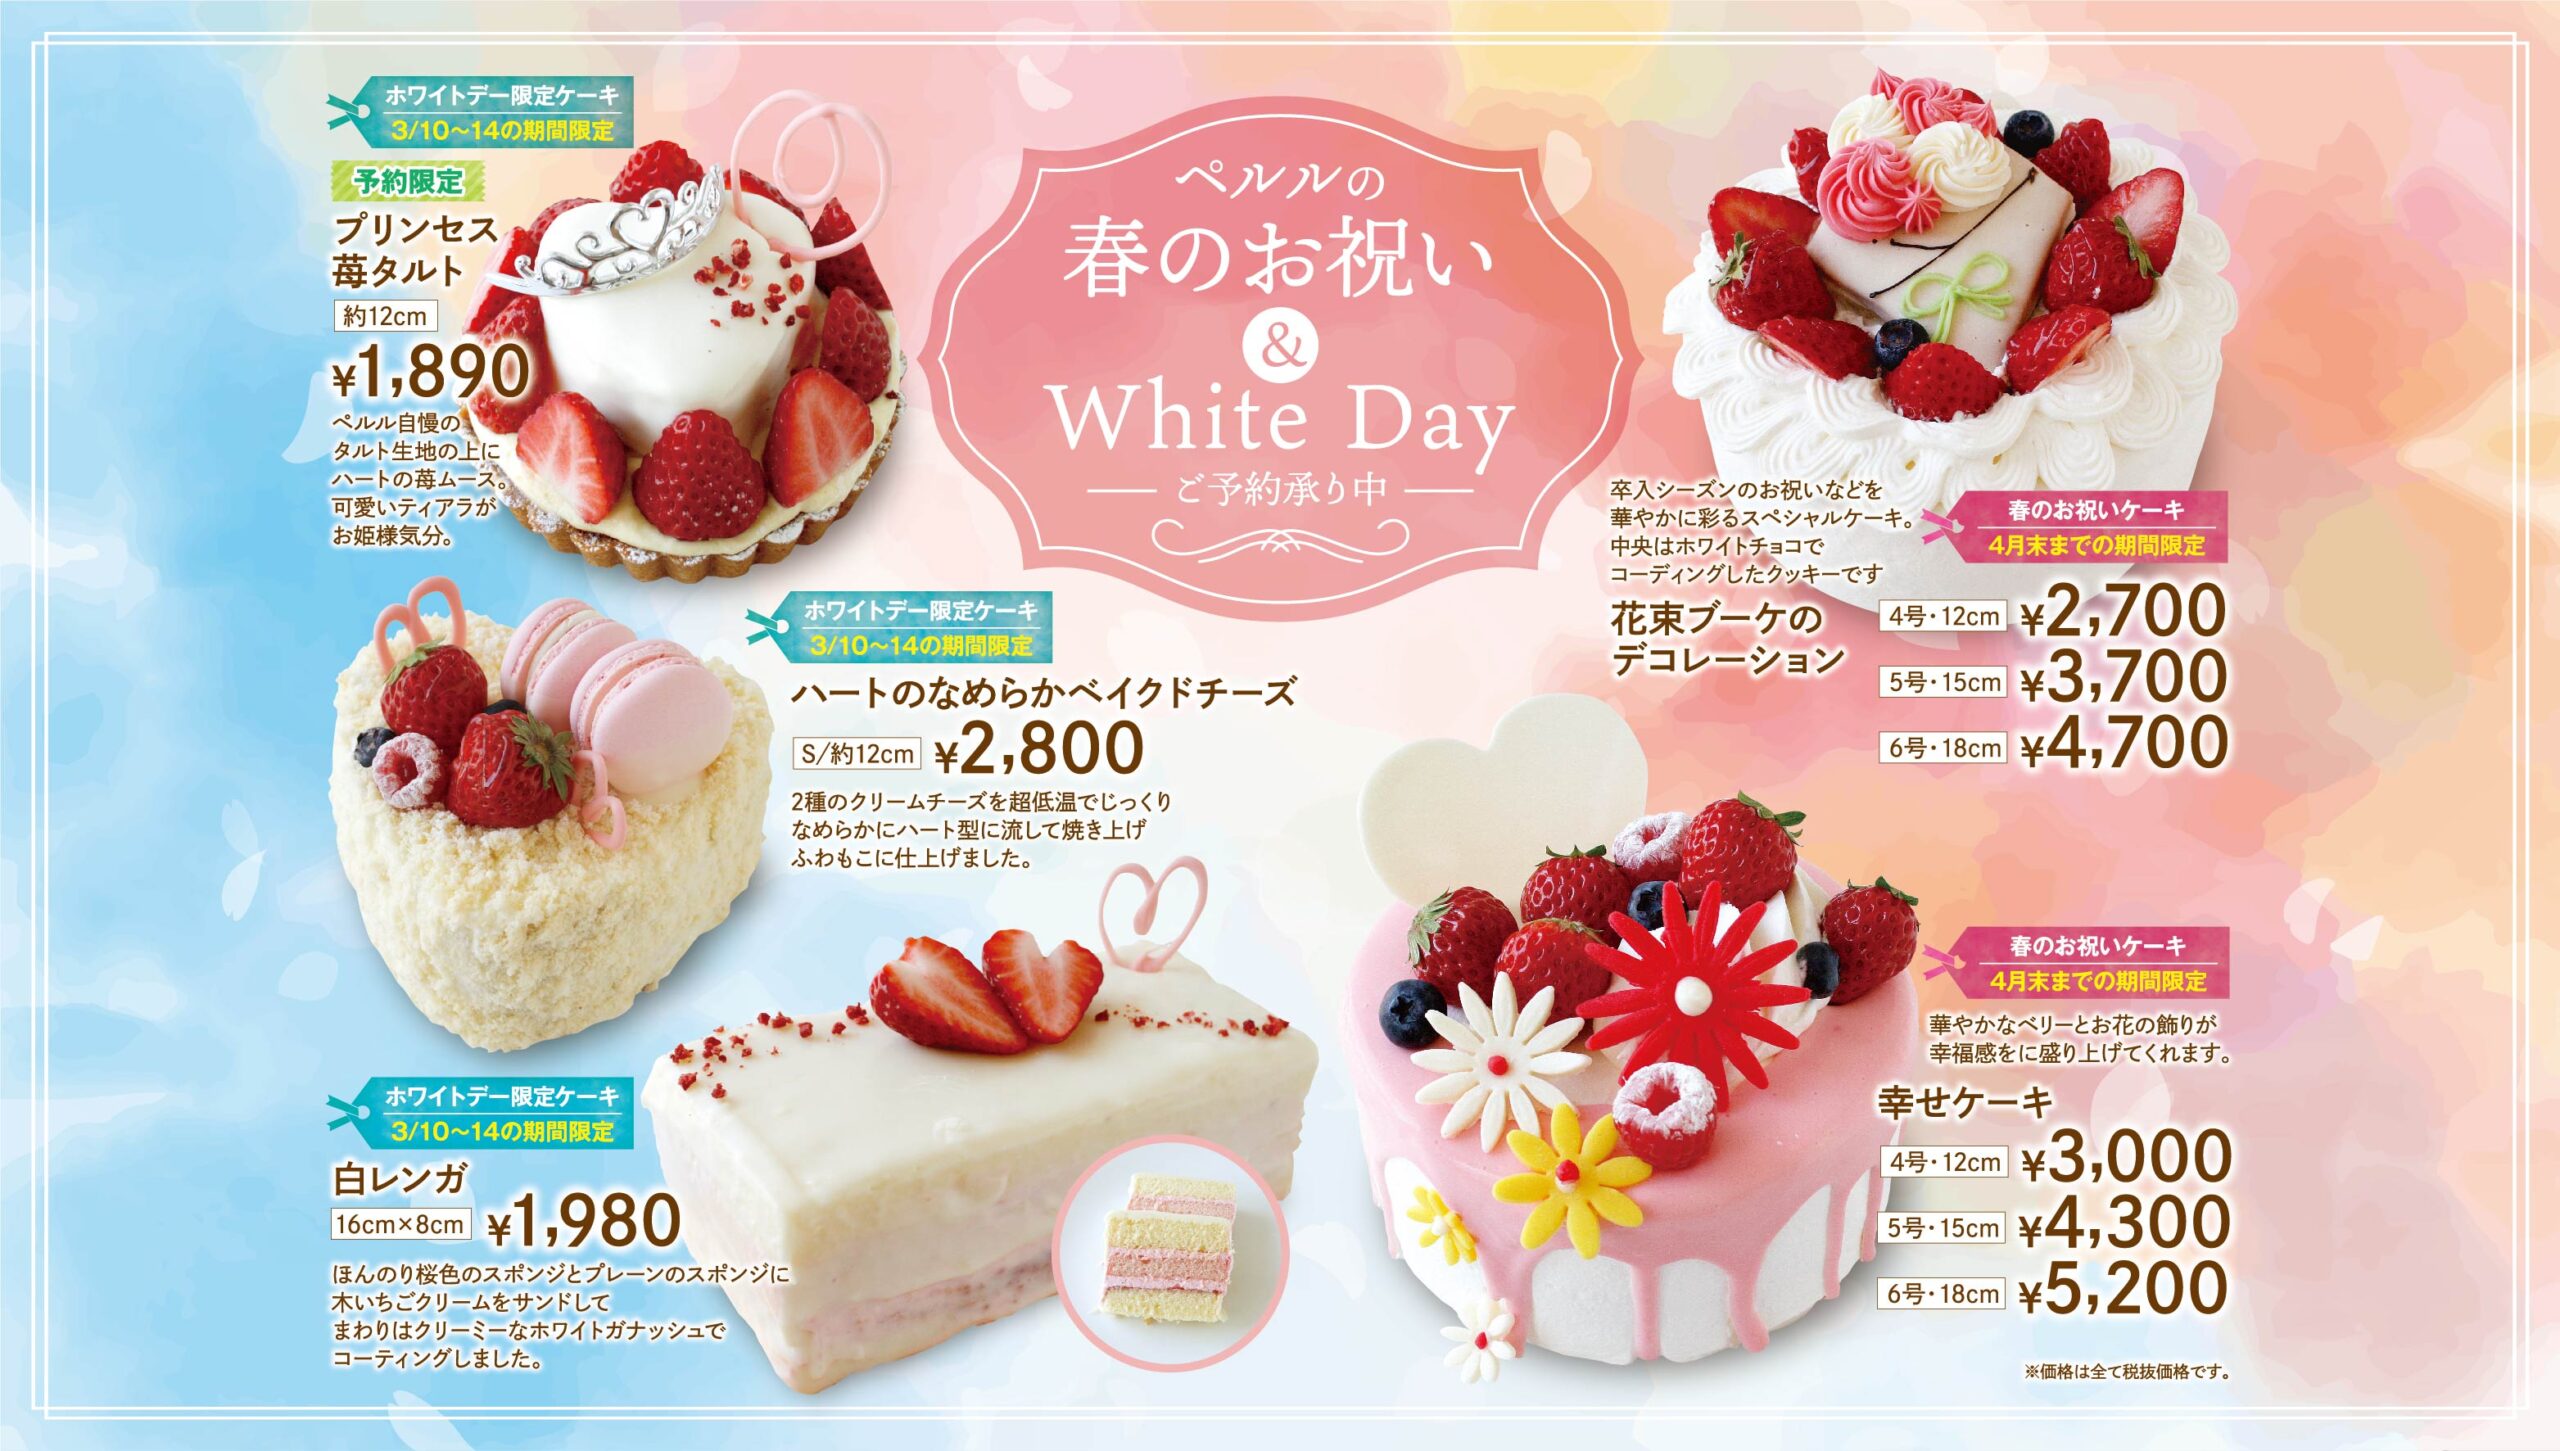 Perle Bake Cake Cafe Genten 沼津で洋菓子を買うなら洋菓子店ペルル